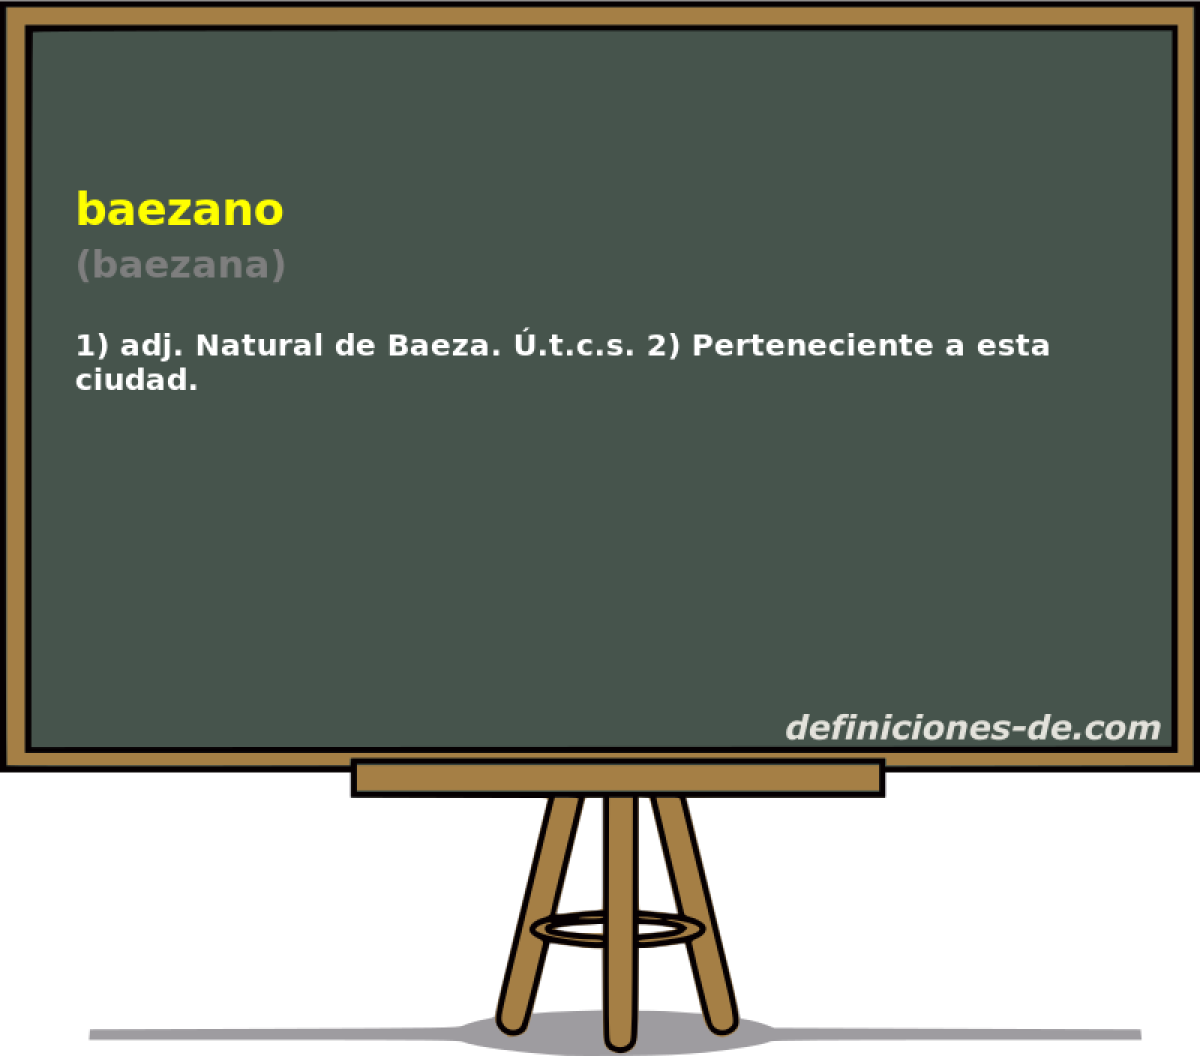 baezano (baezana)